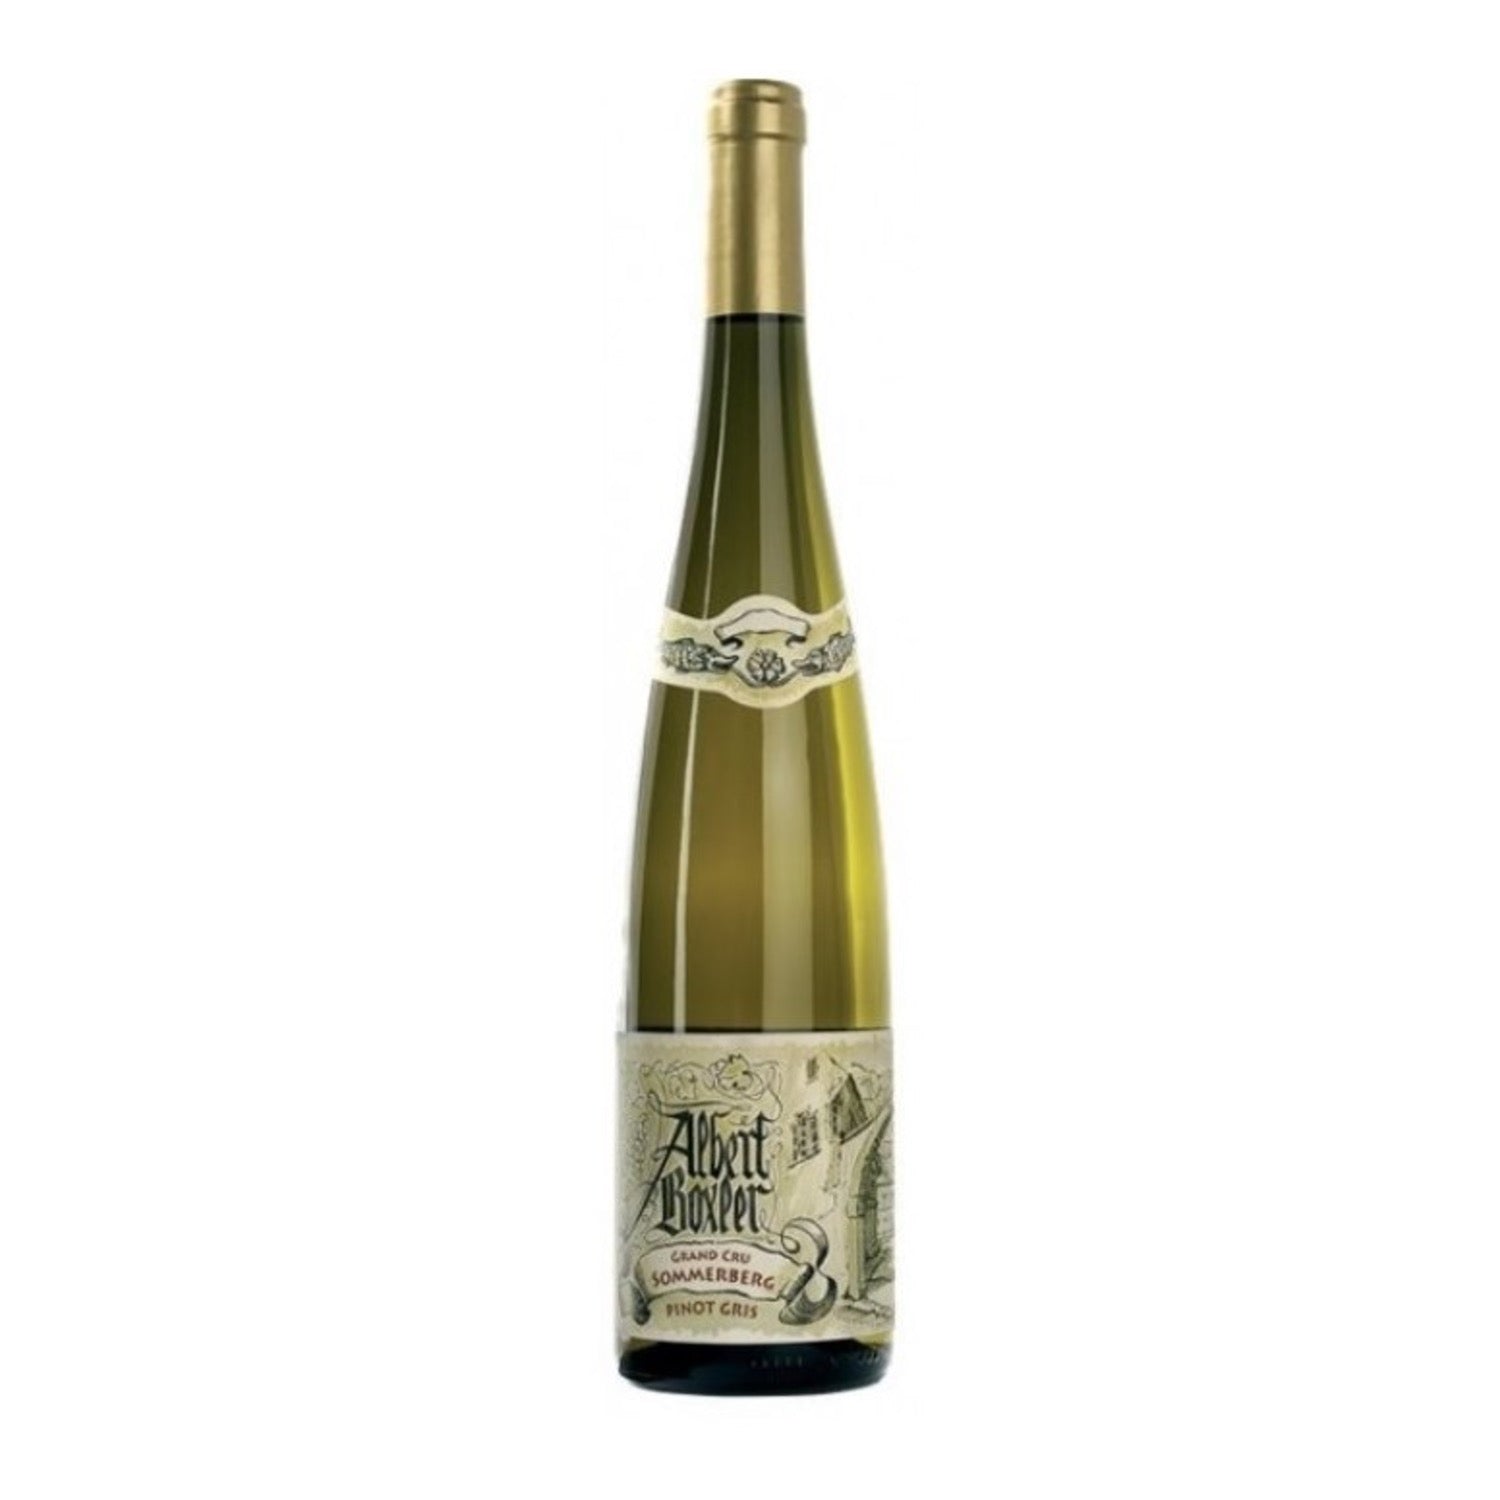 Domaine ALBERT BOXLER Pinot Gris Grand Cru "Sommerberg - W" 2017